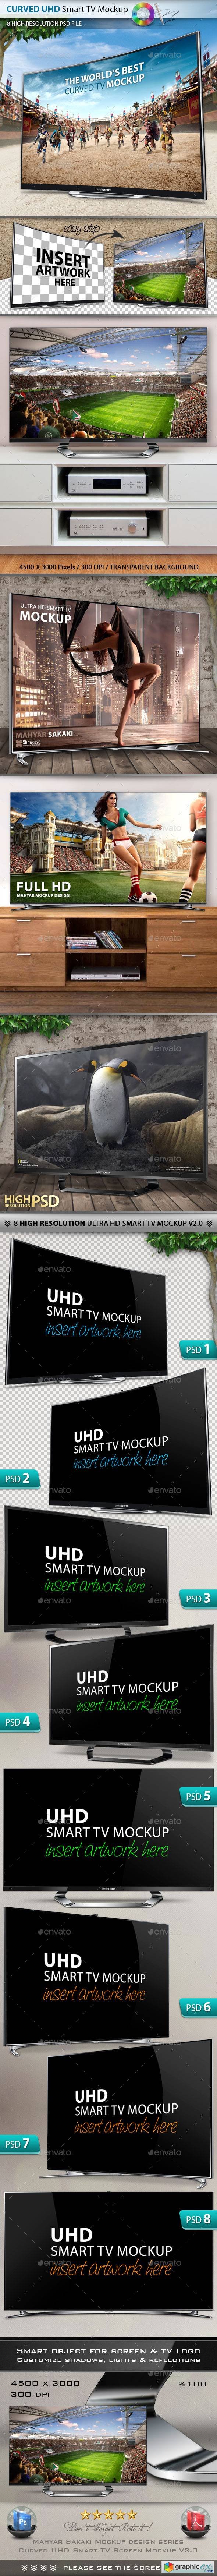 8 UHD Smart Screen Mockup V2.0